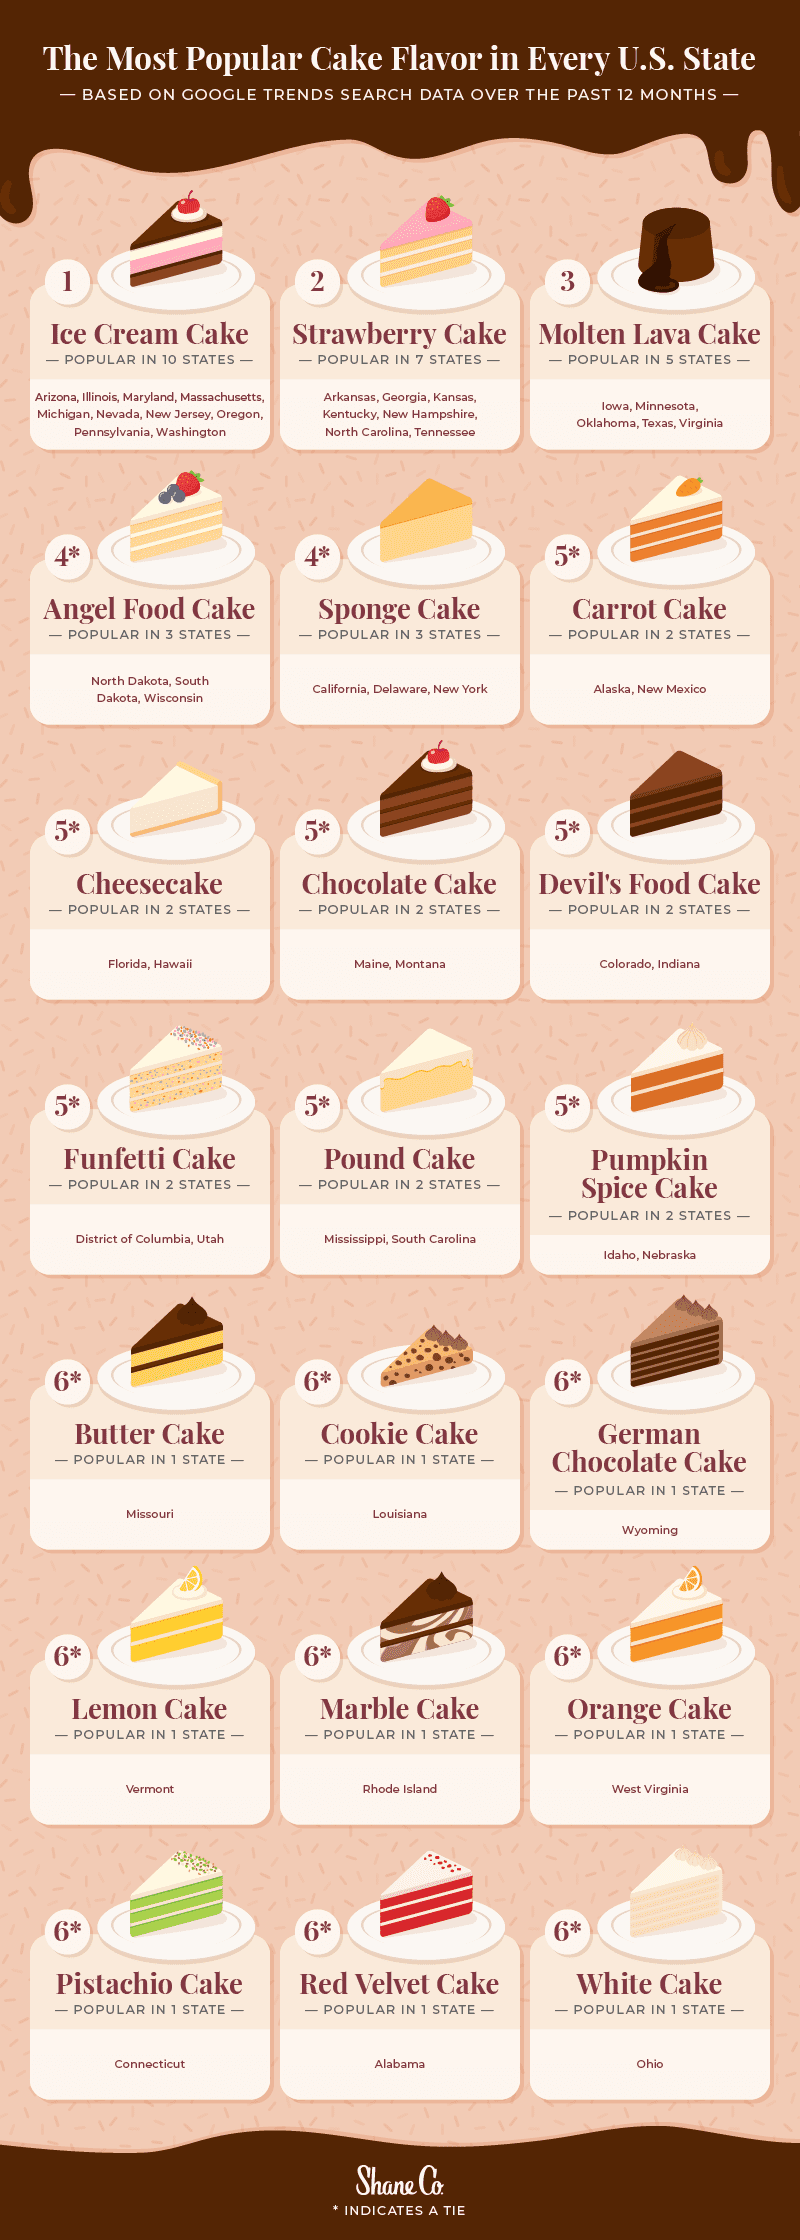 26 Decadent Chocolate Wedding Cake Ideas